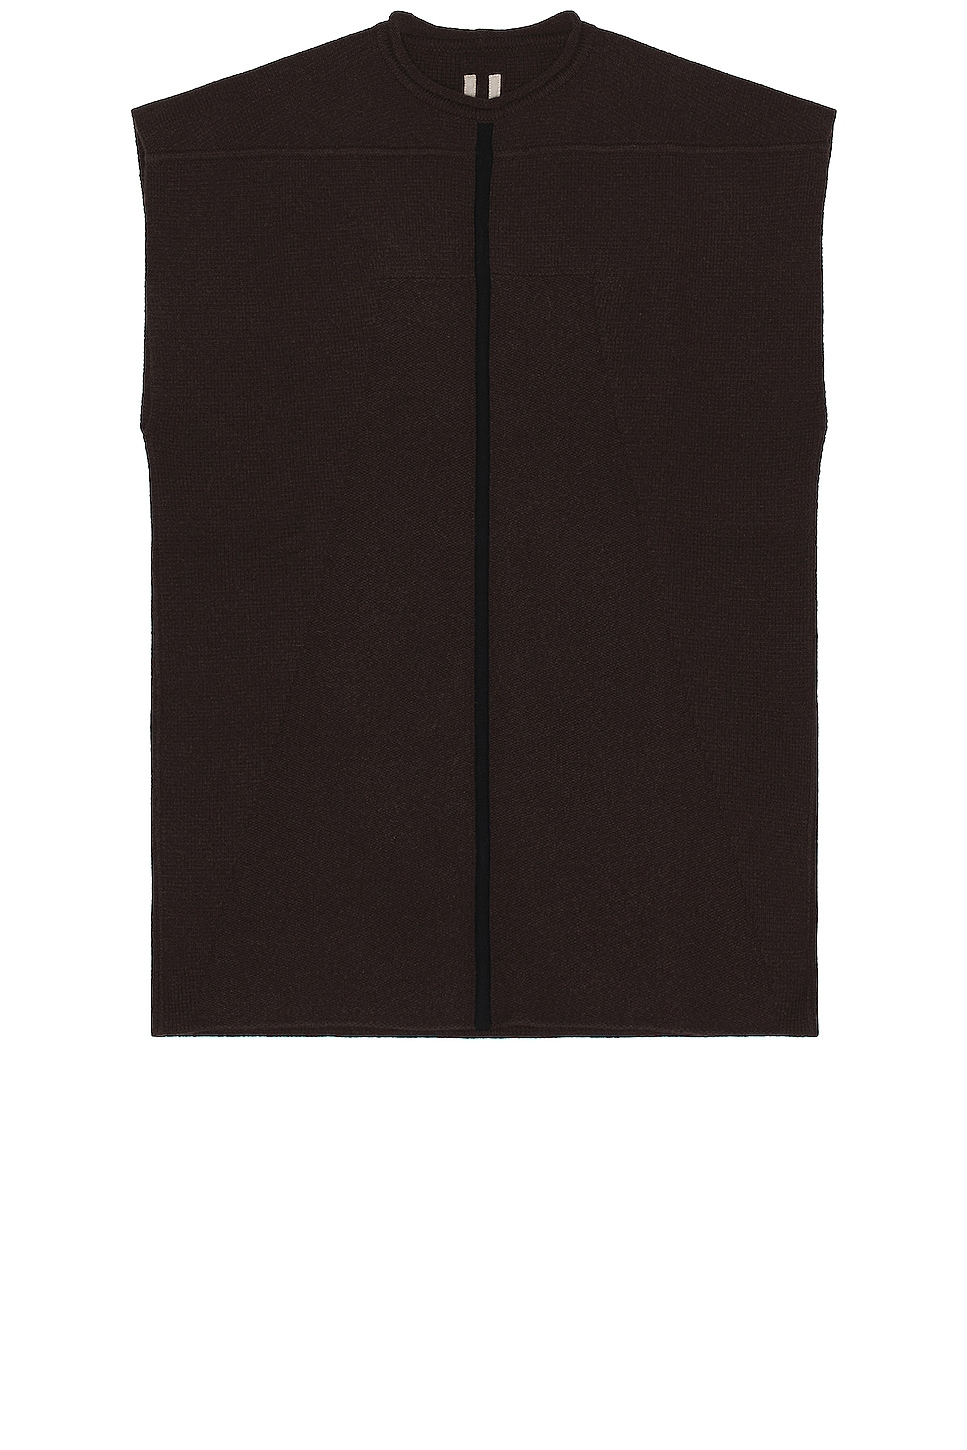 Image 1 of Rick Owens Sweater in Brown & Black